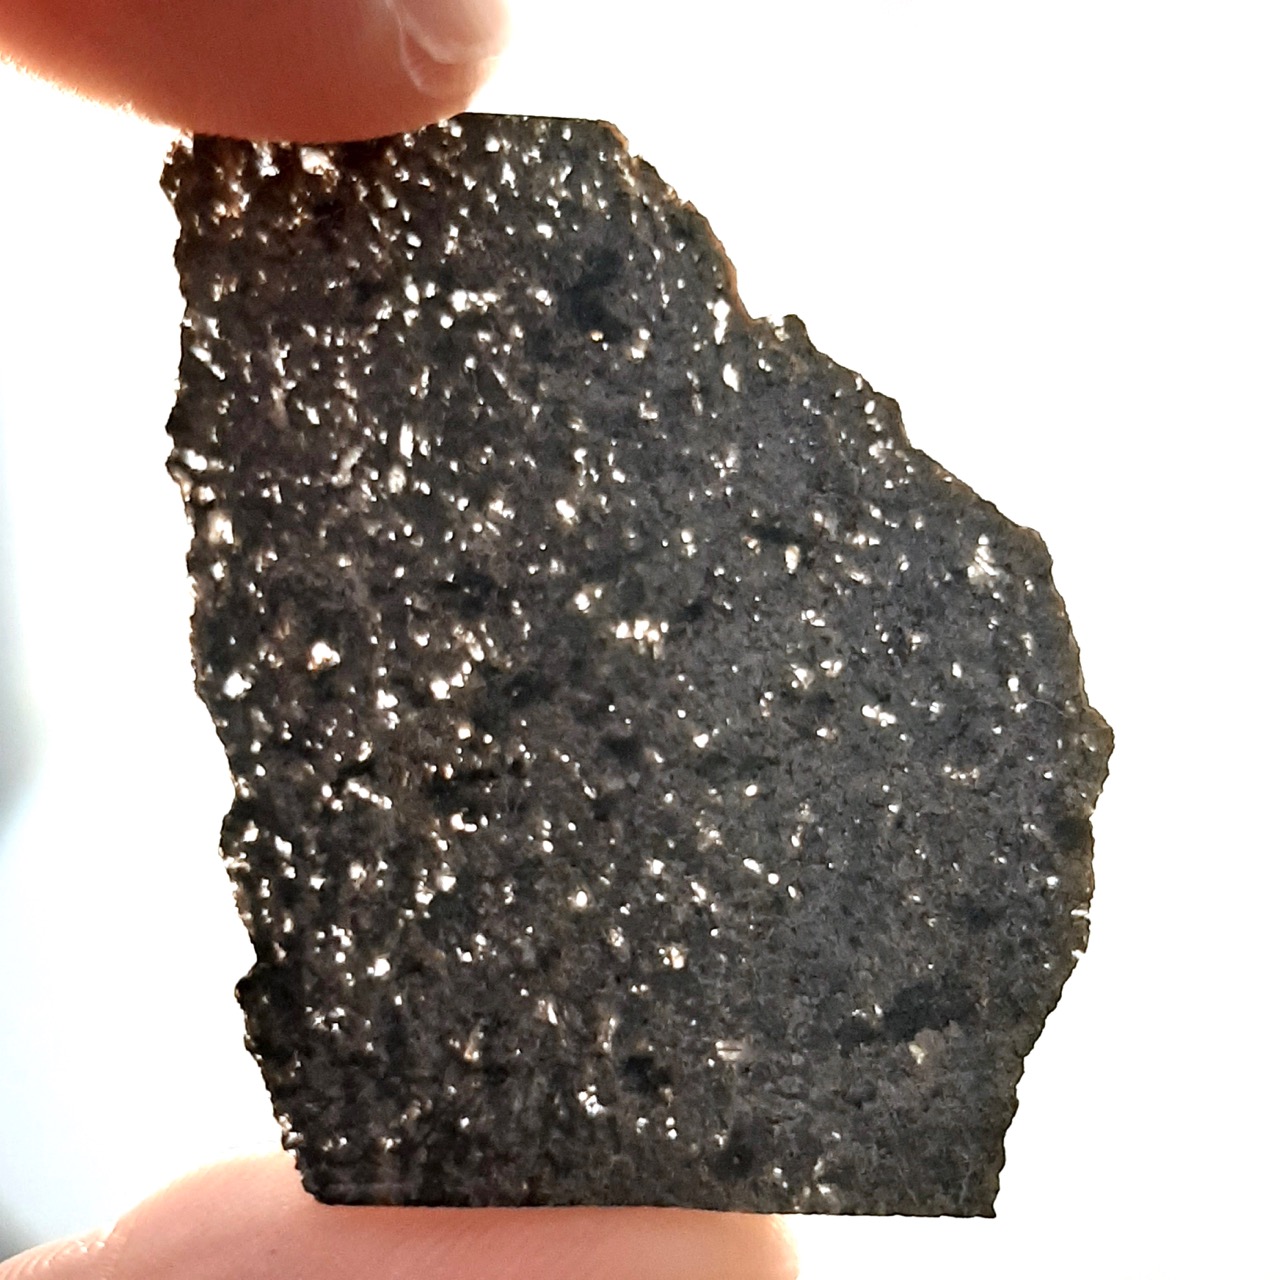 Martian meteorite. NWA 13190. Rock from Mars. Translucent slice.